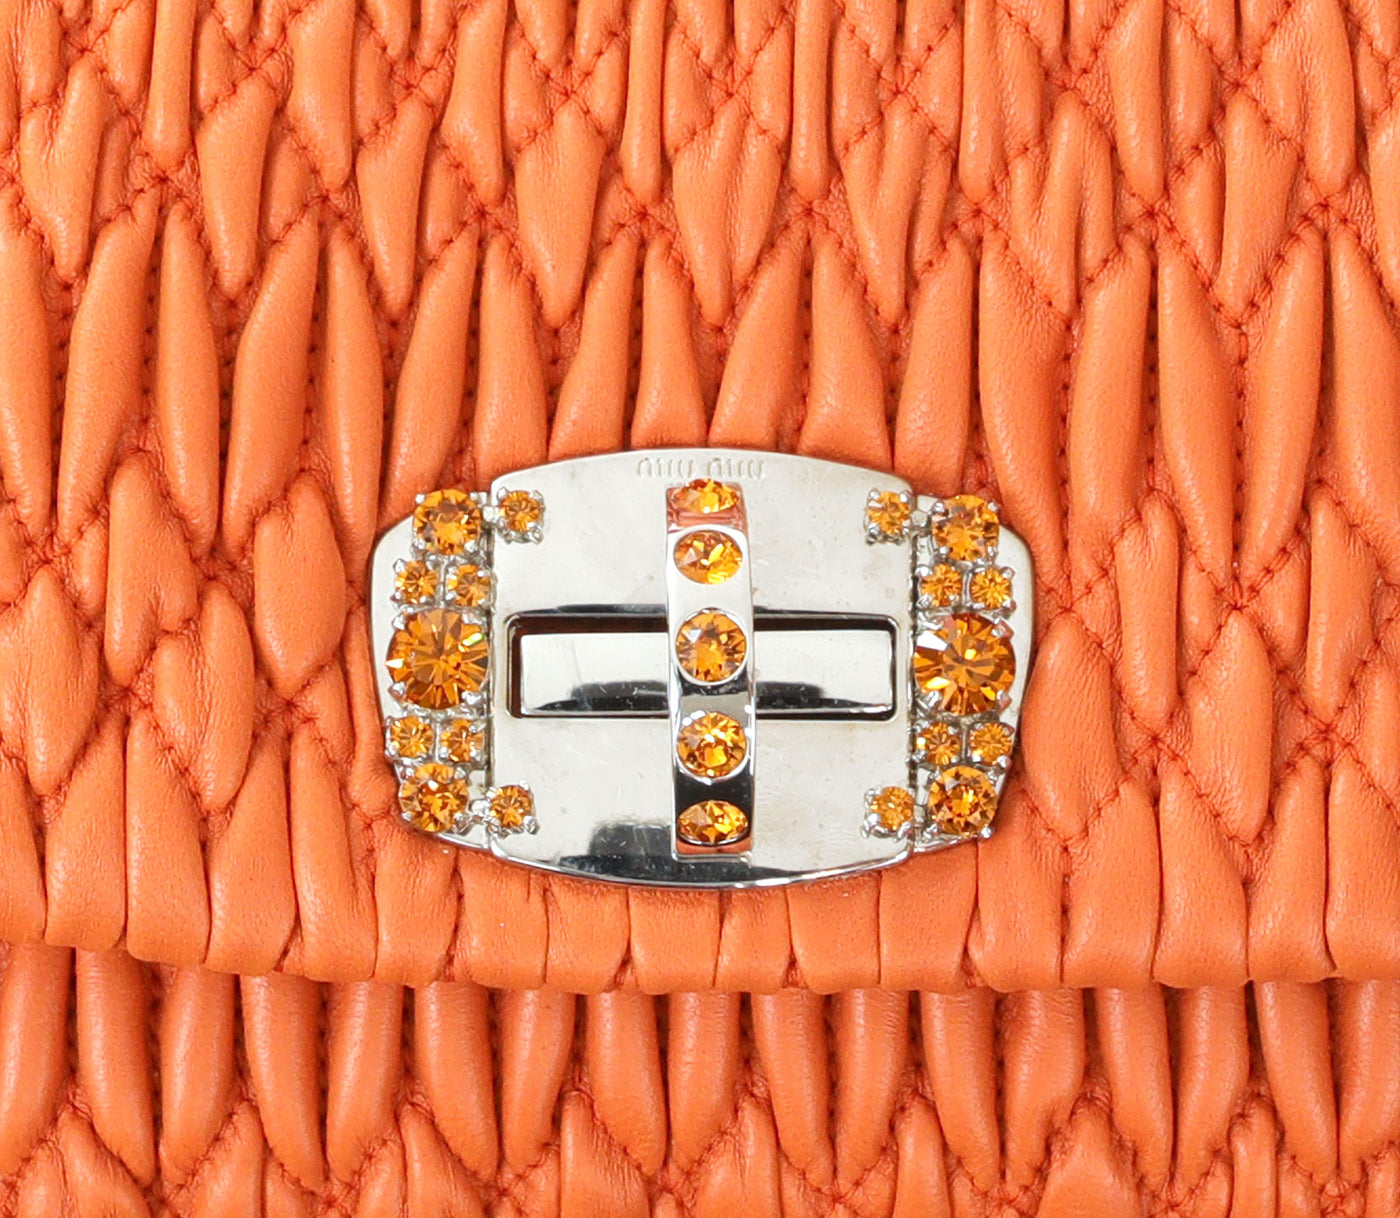 Miu Miu Orange Iconic Crystal Cloque Small Shoulder Bag with Silver Hardware